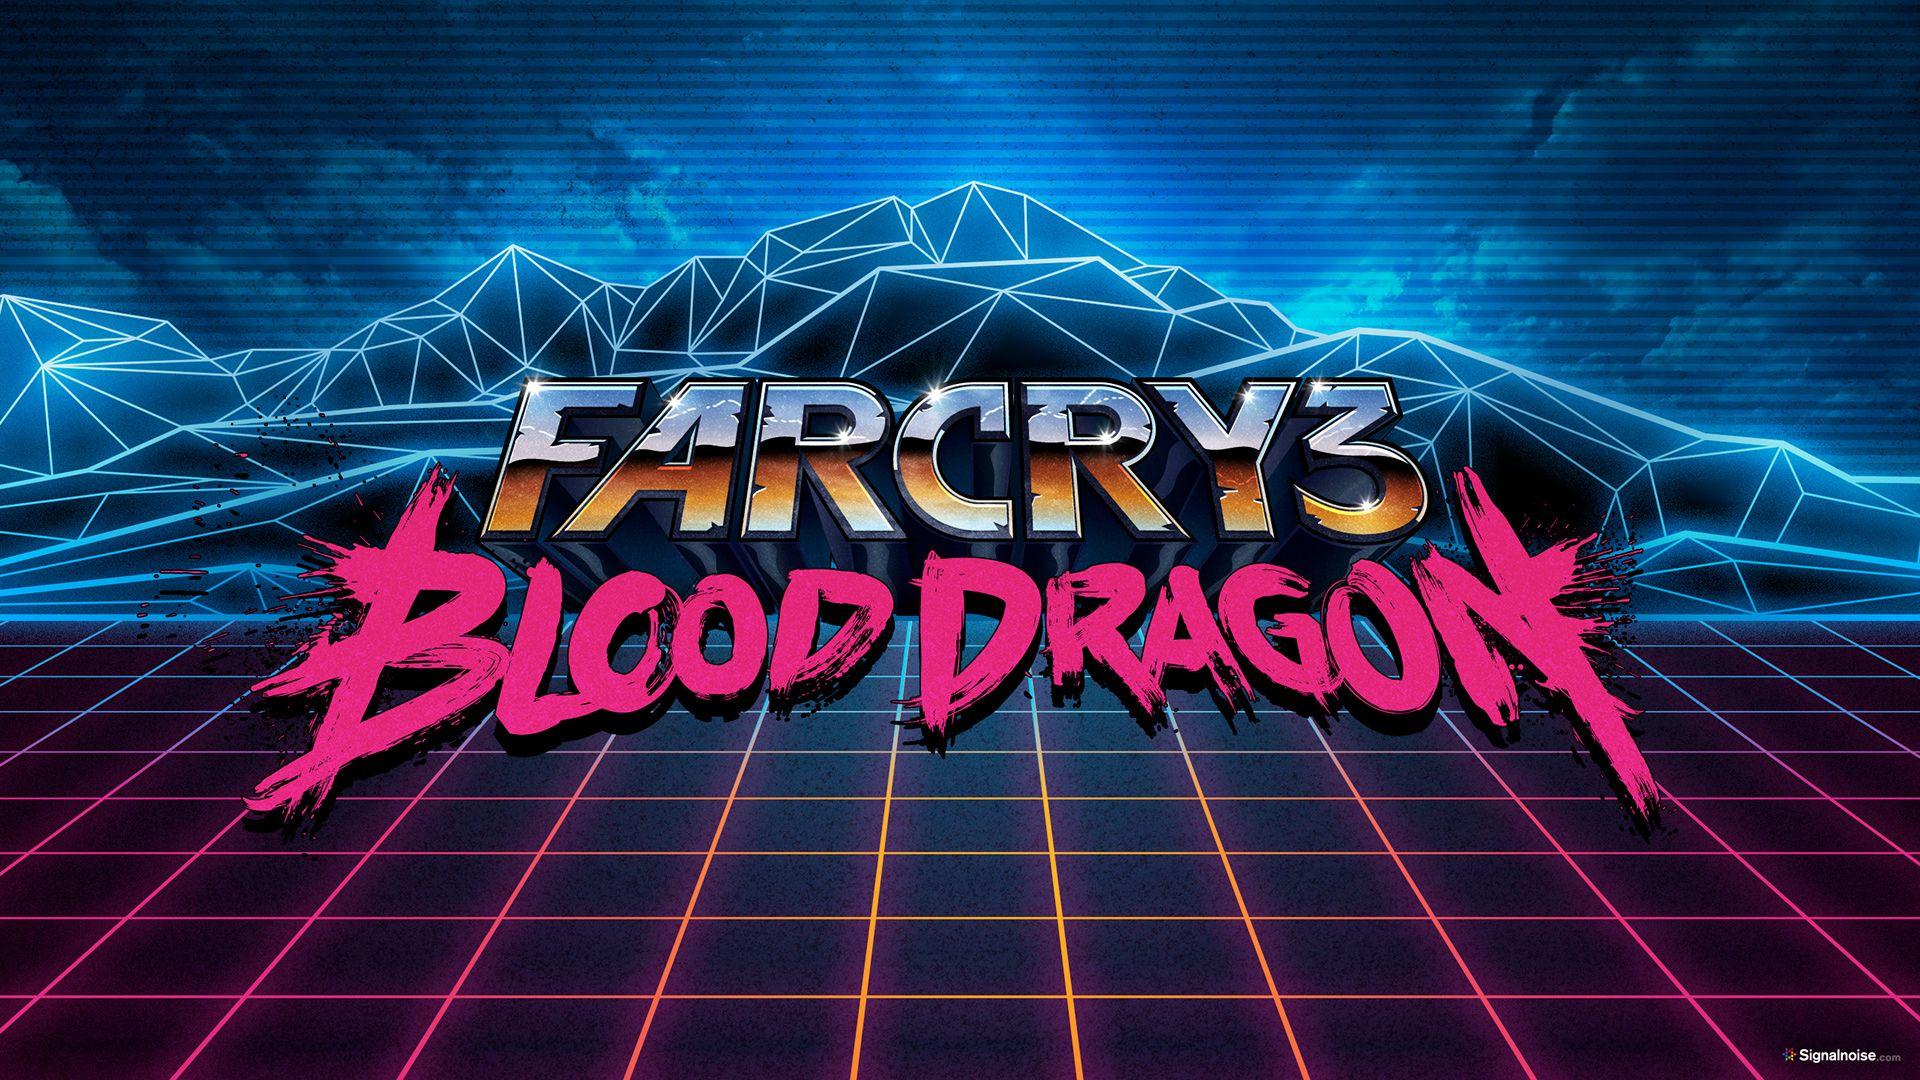 blood dragon soundtrack download free